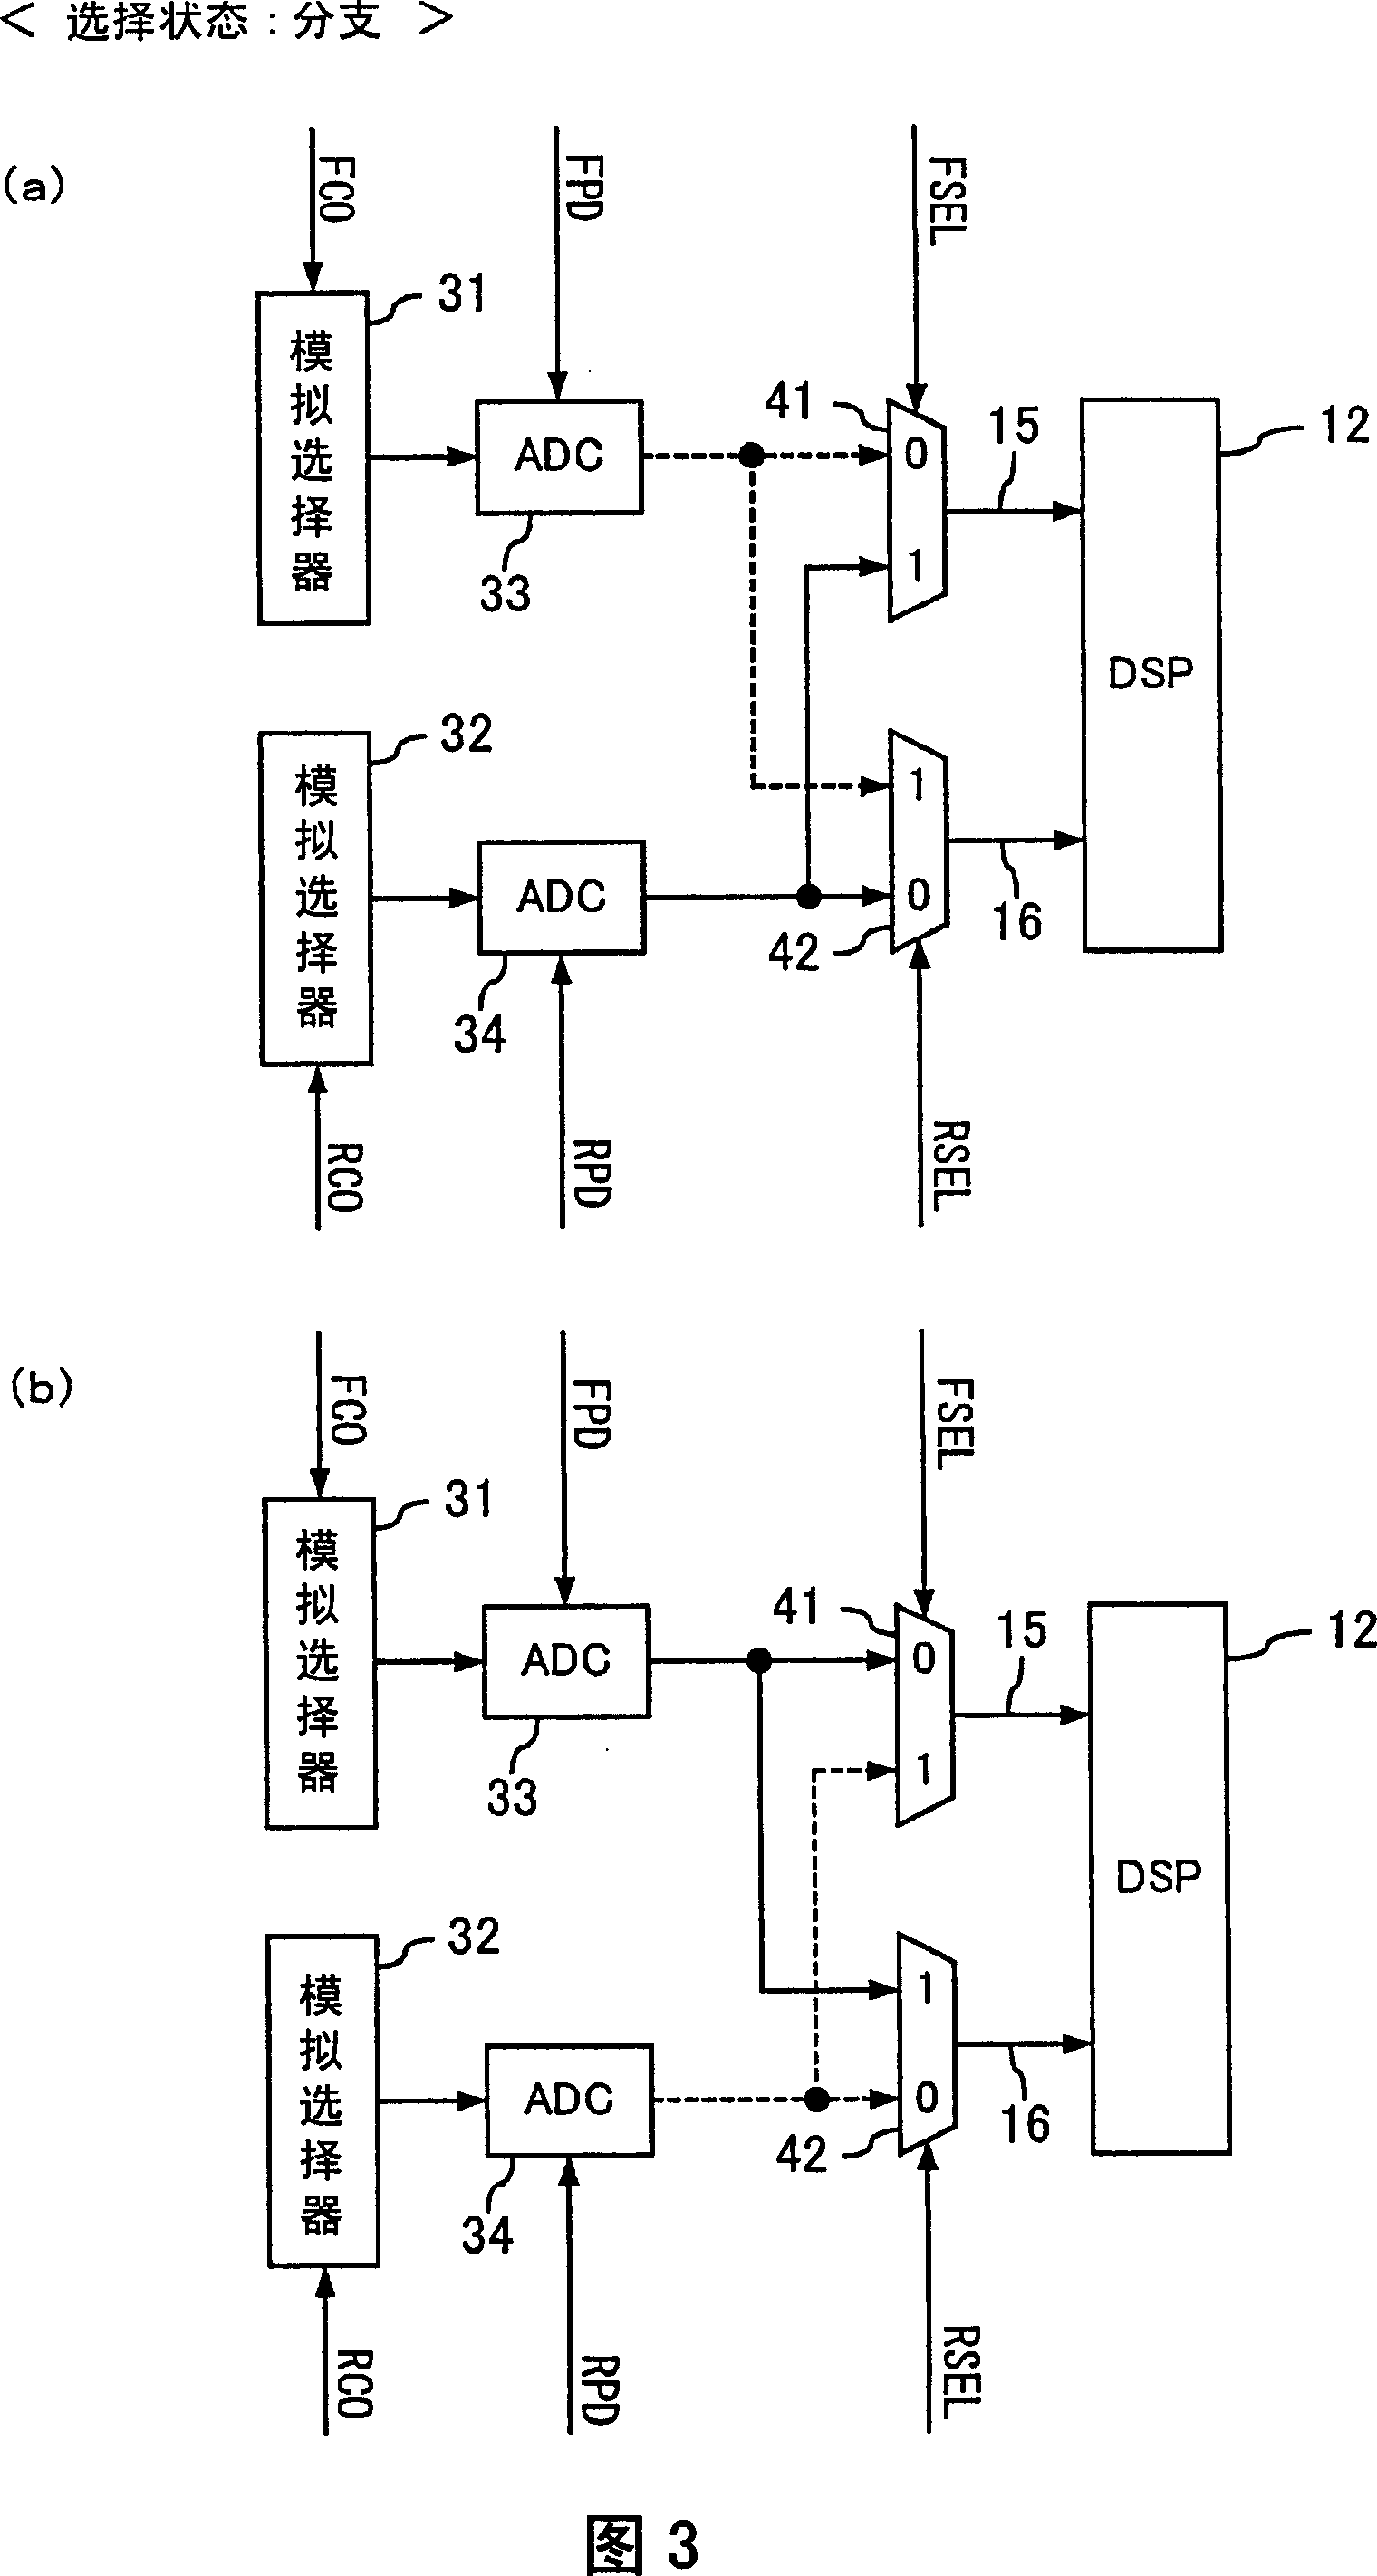 Signal selecting circuit and program